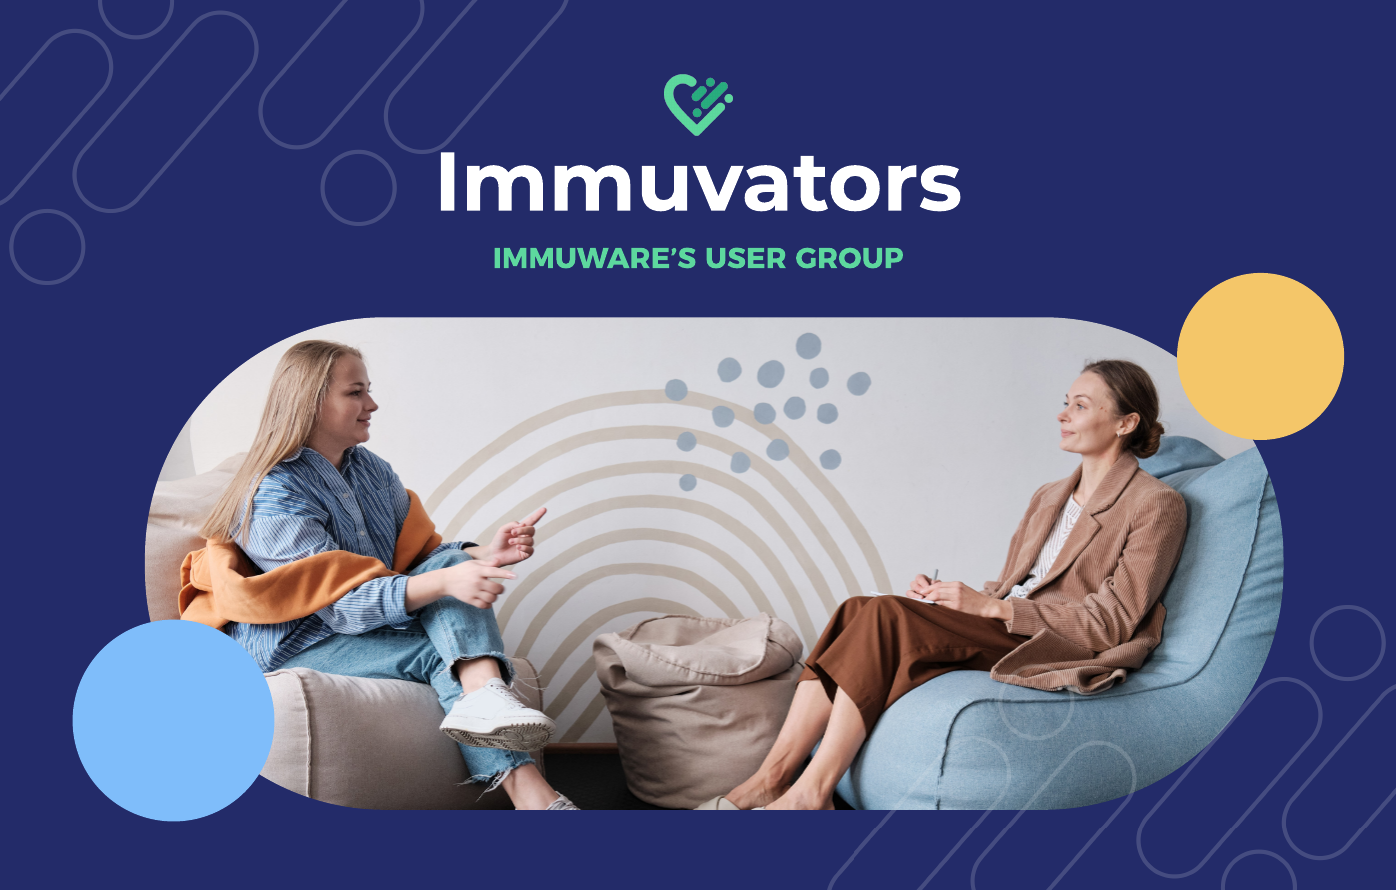 Immuvators: An Insight Into Immuware's User Group